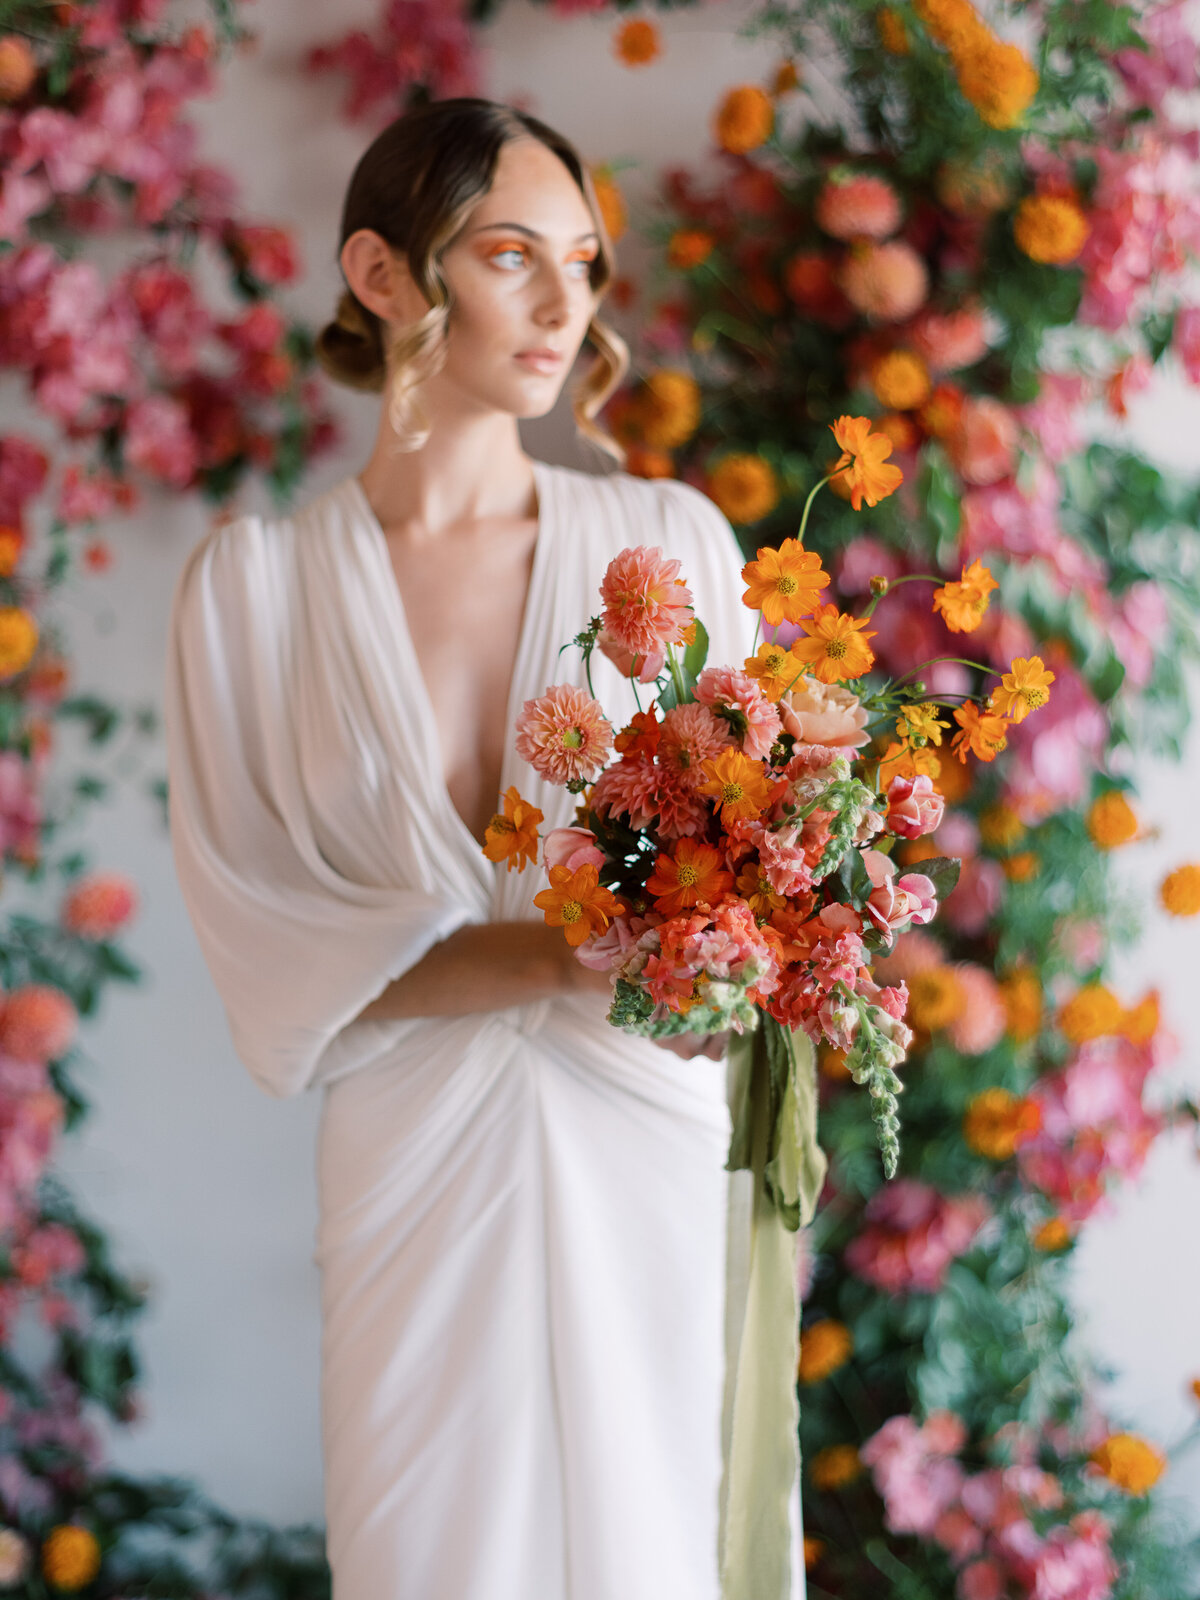 Sarah Rae Floral Designs Wedding Event Florist Flowers Kentucky Chic Whimsical Romantic Weddings35